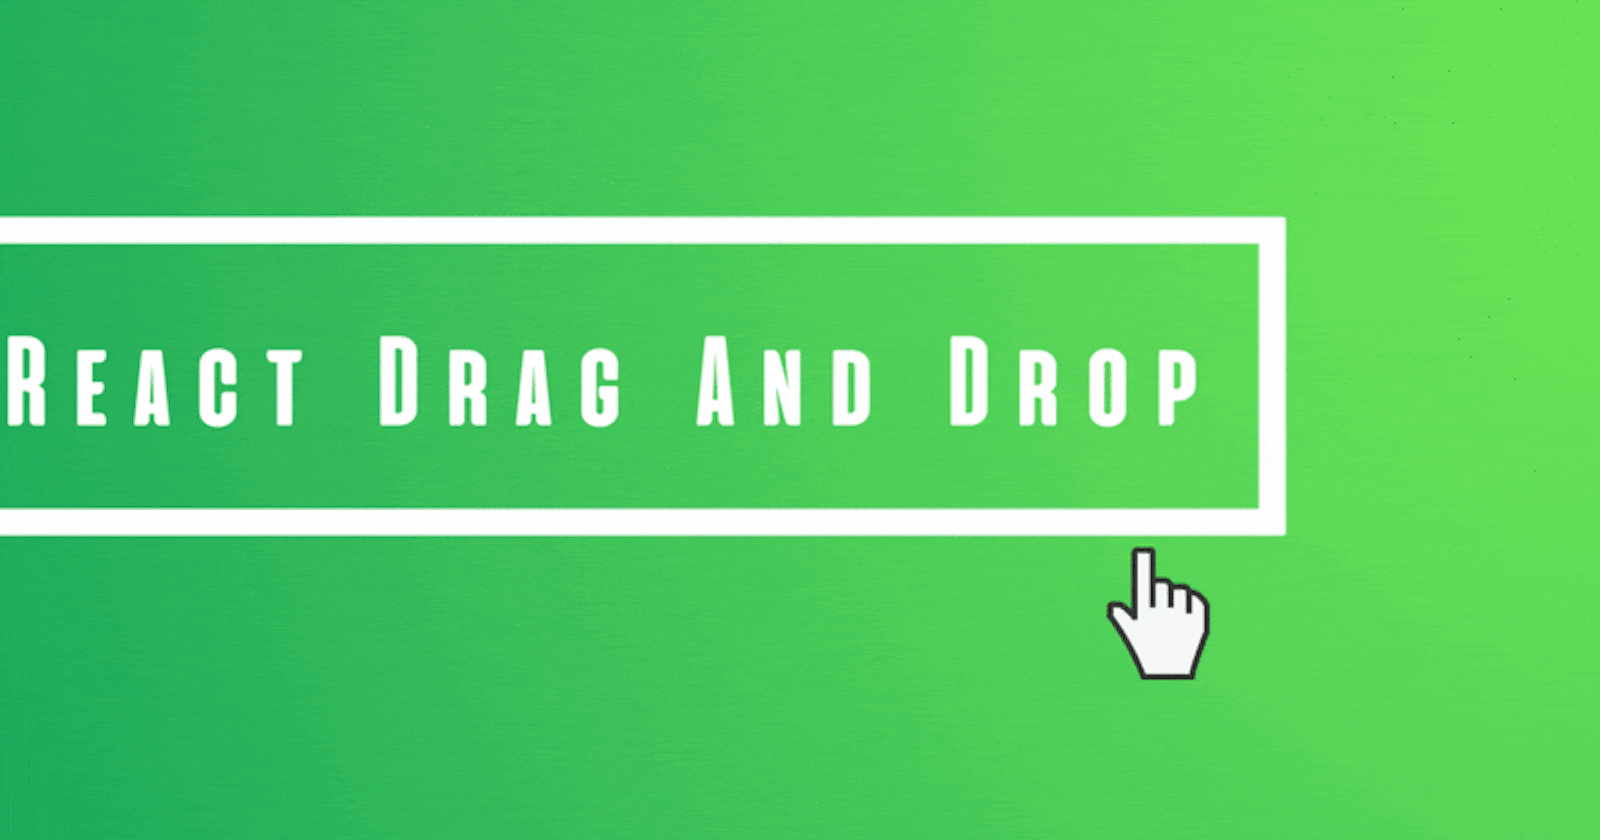 The Duolingo Drag and Drop Quiz component.